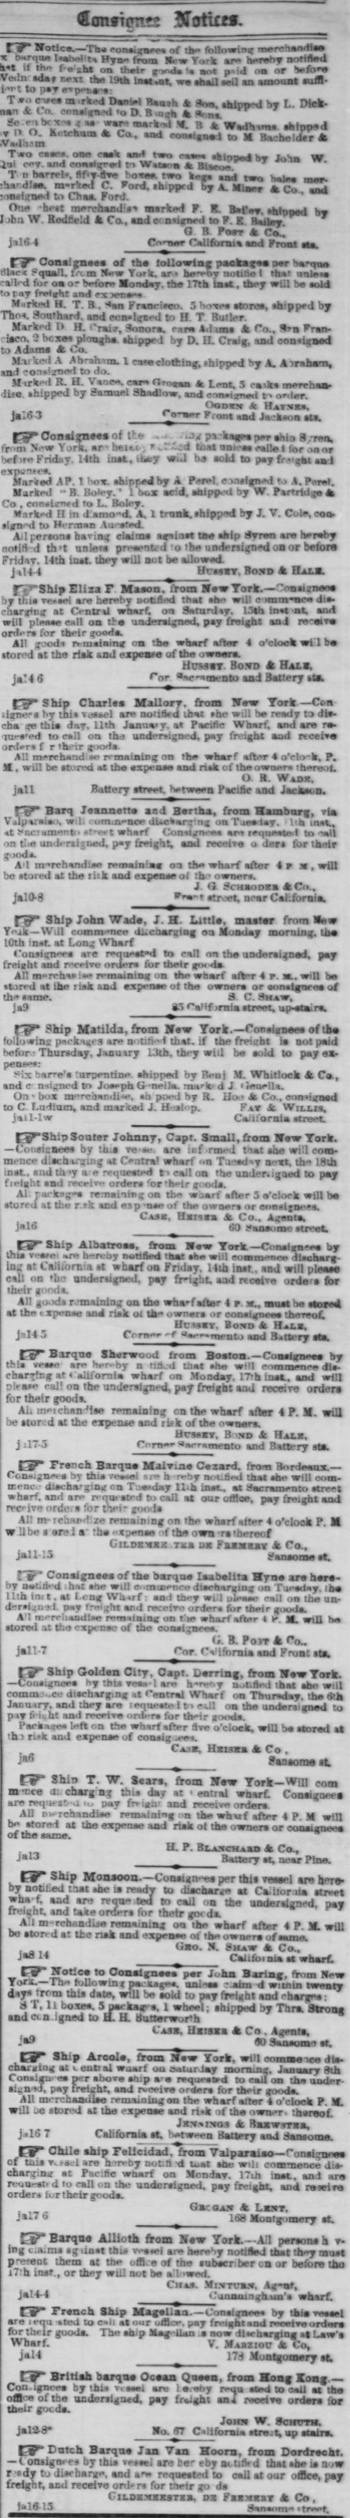 Consignee Notices, Port of San Francisco 1853.